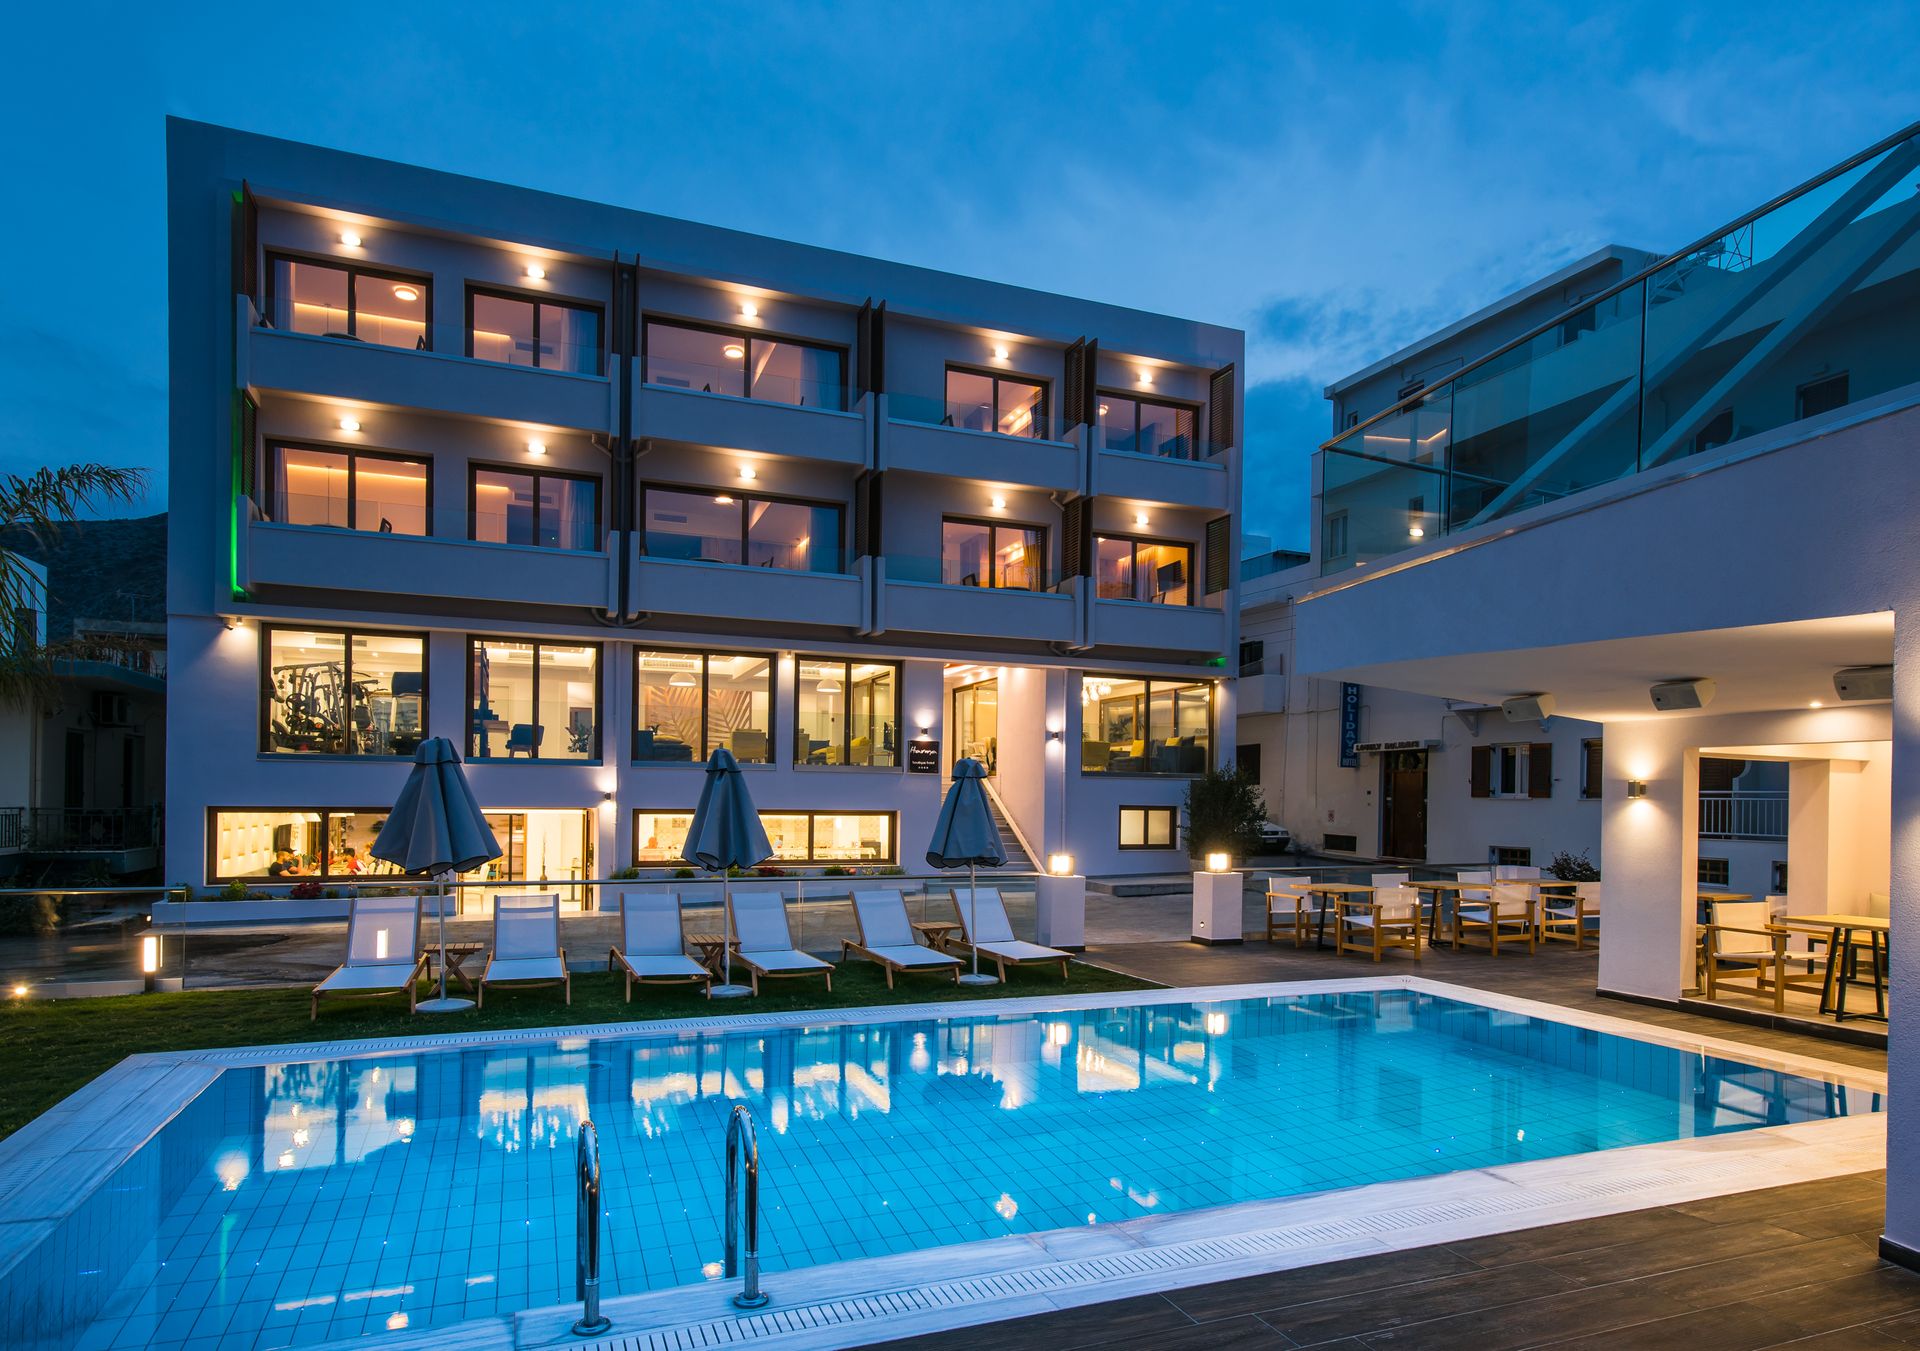 4* Harma Boutique Hotel - Χερσόνησος, Κρήτη ✦ 2 Ημέρες (1 Διανυκτέρευση) ✦ 2 άτομα ✦ 8 ✦ 20/04/2022 έως 30/09/2022 ✦ Κοντά στην παραλία!